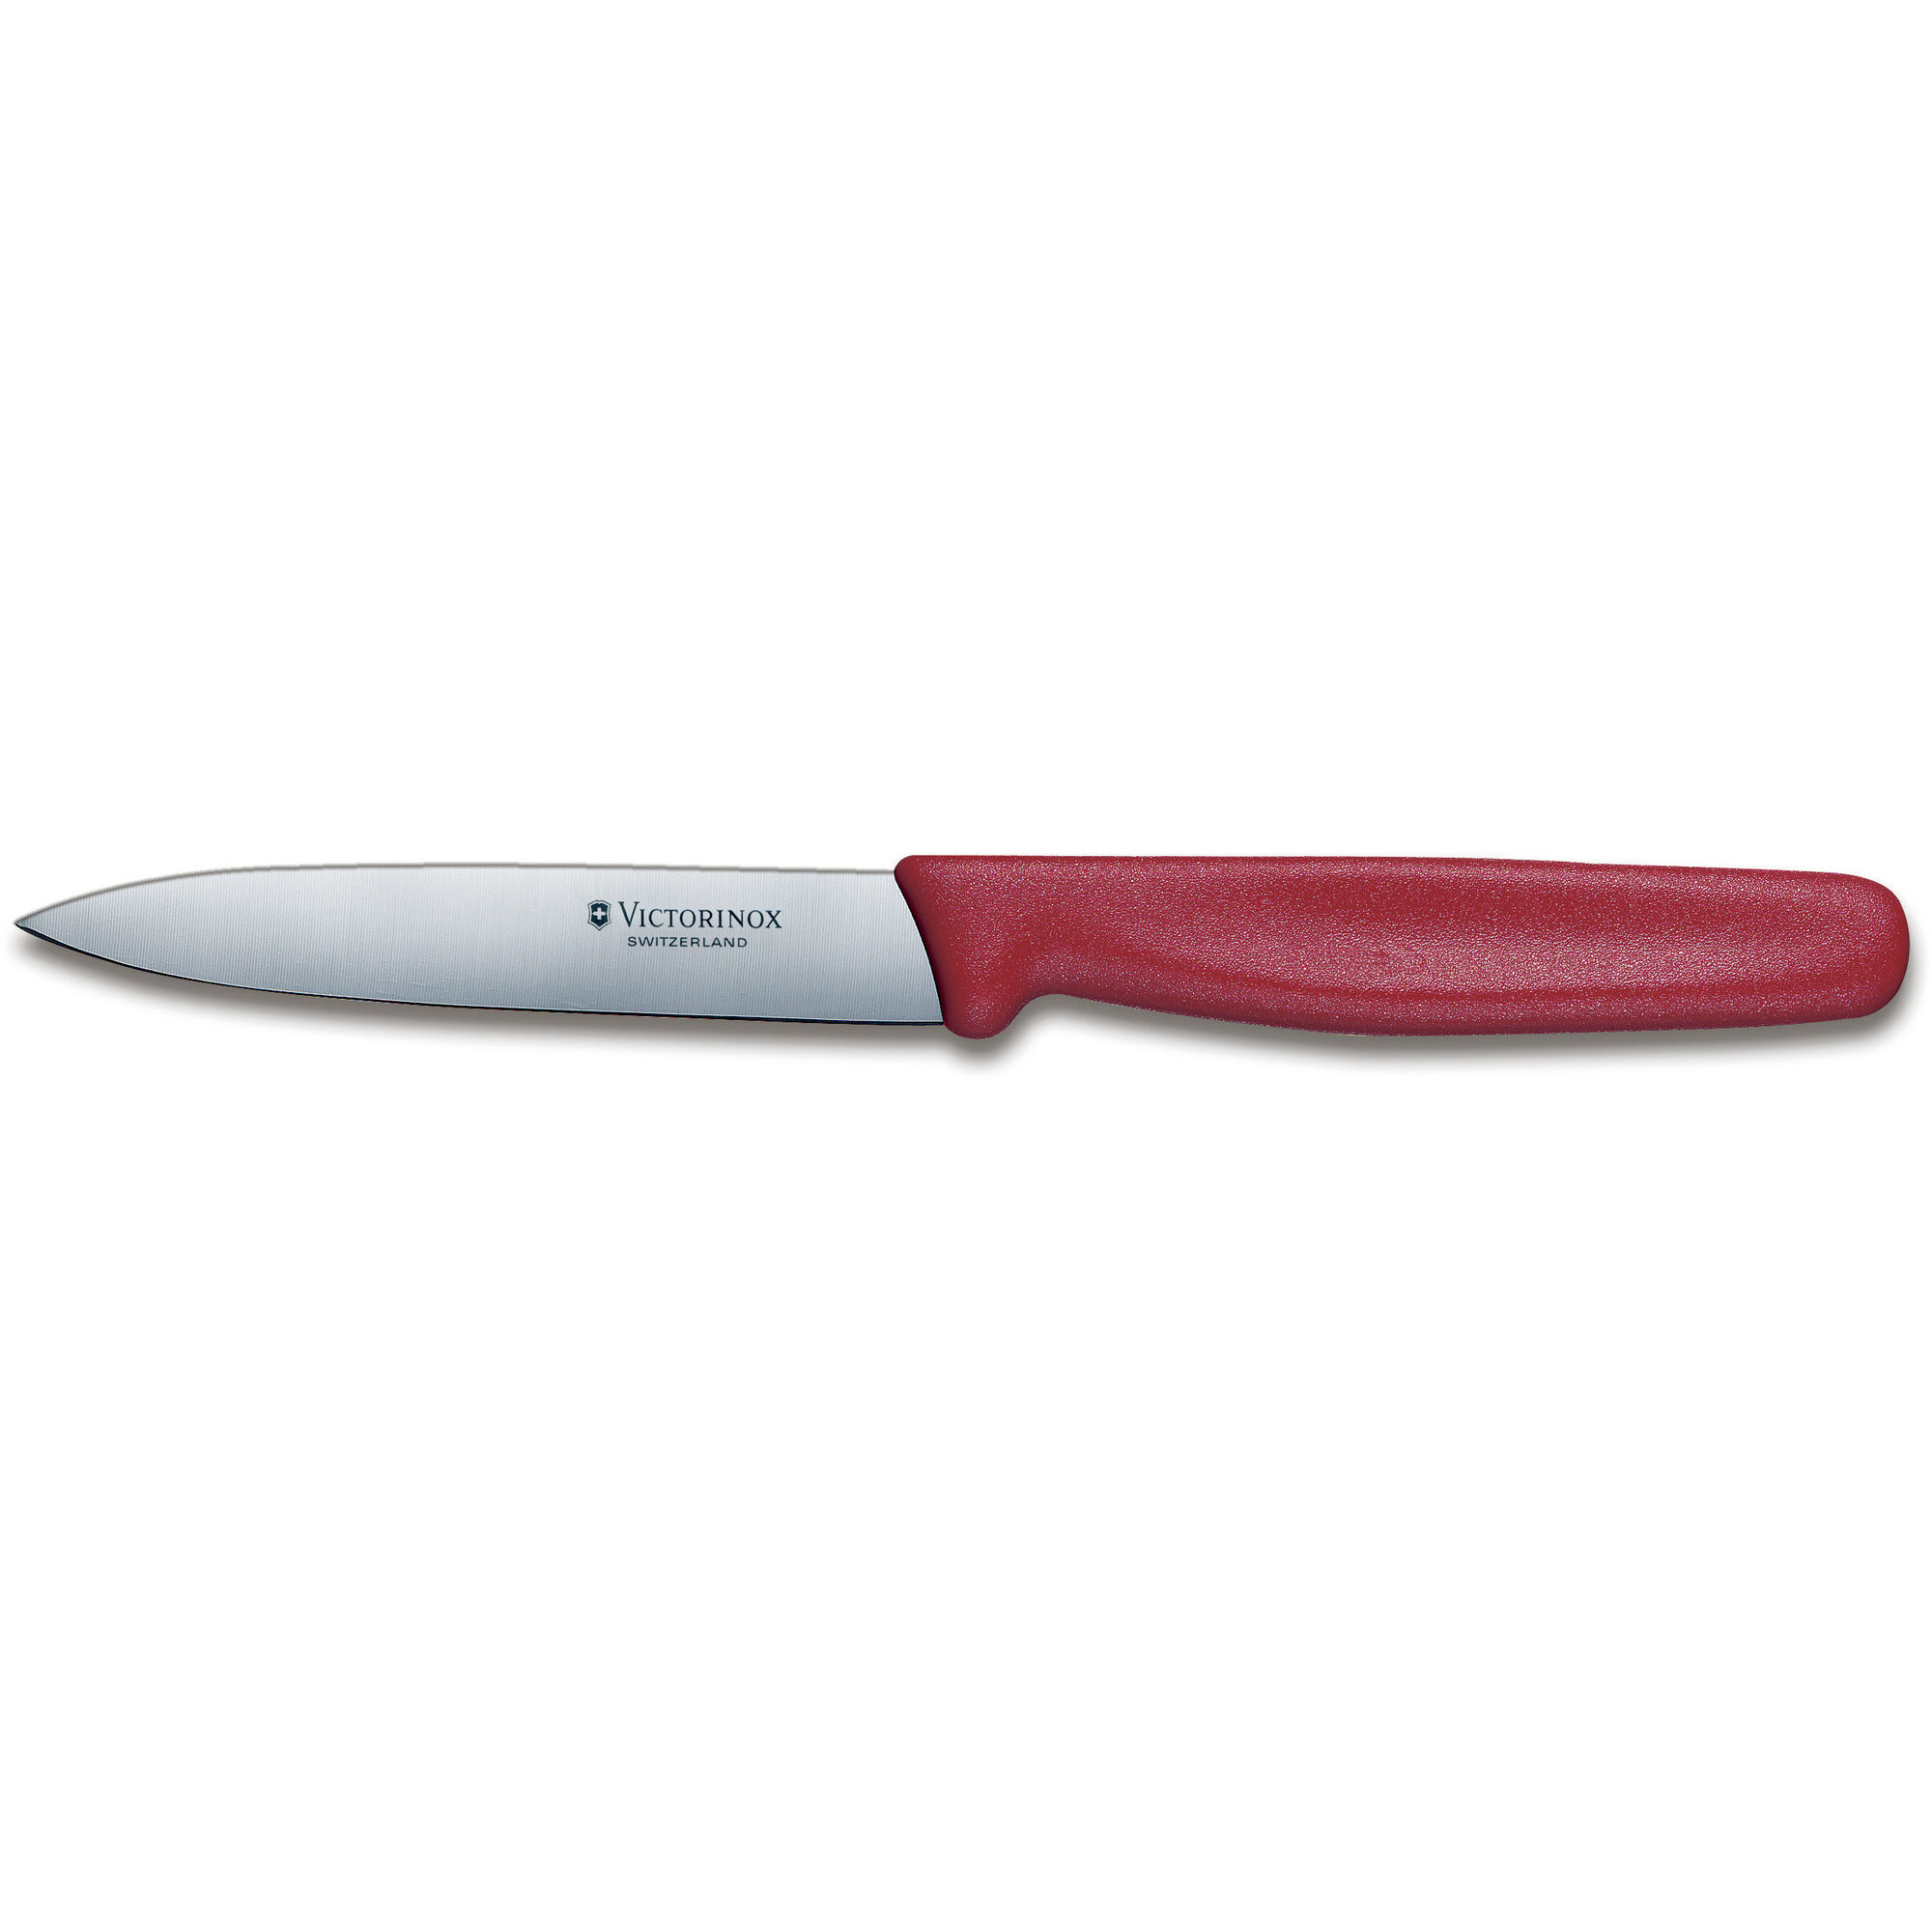 Victorinox Spids urtekniv i rød 10cm.